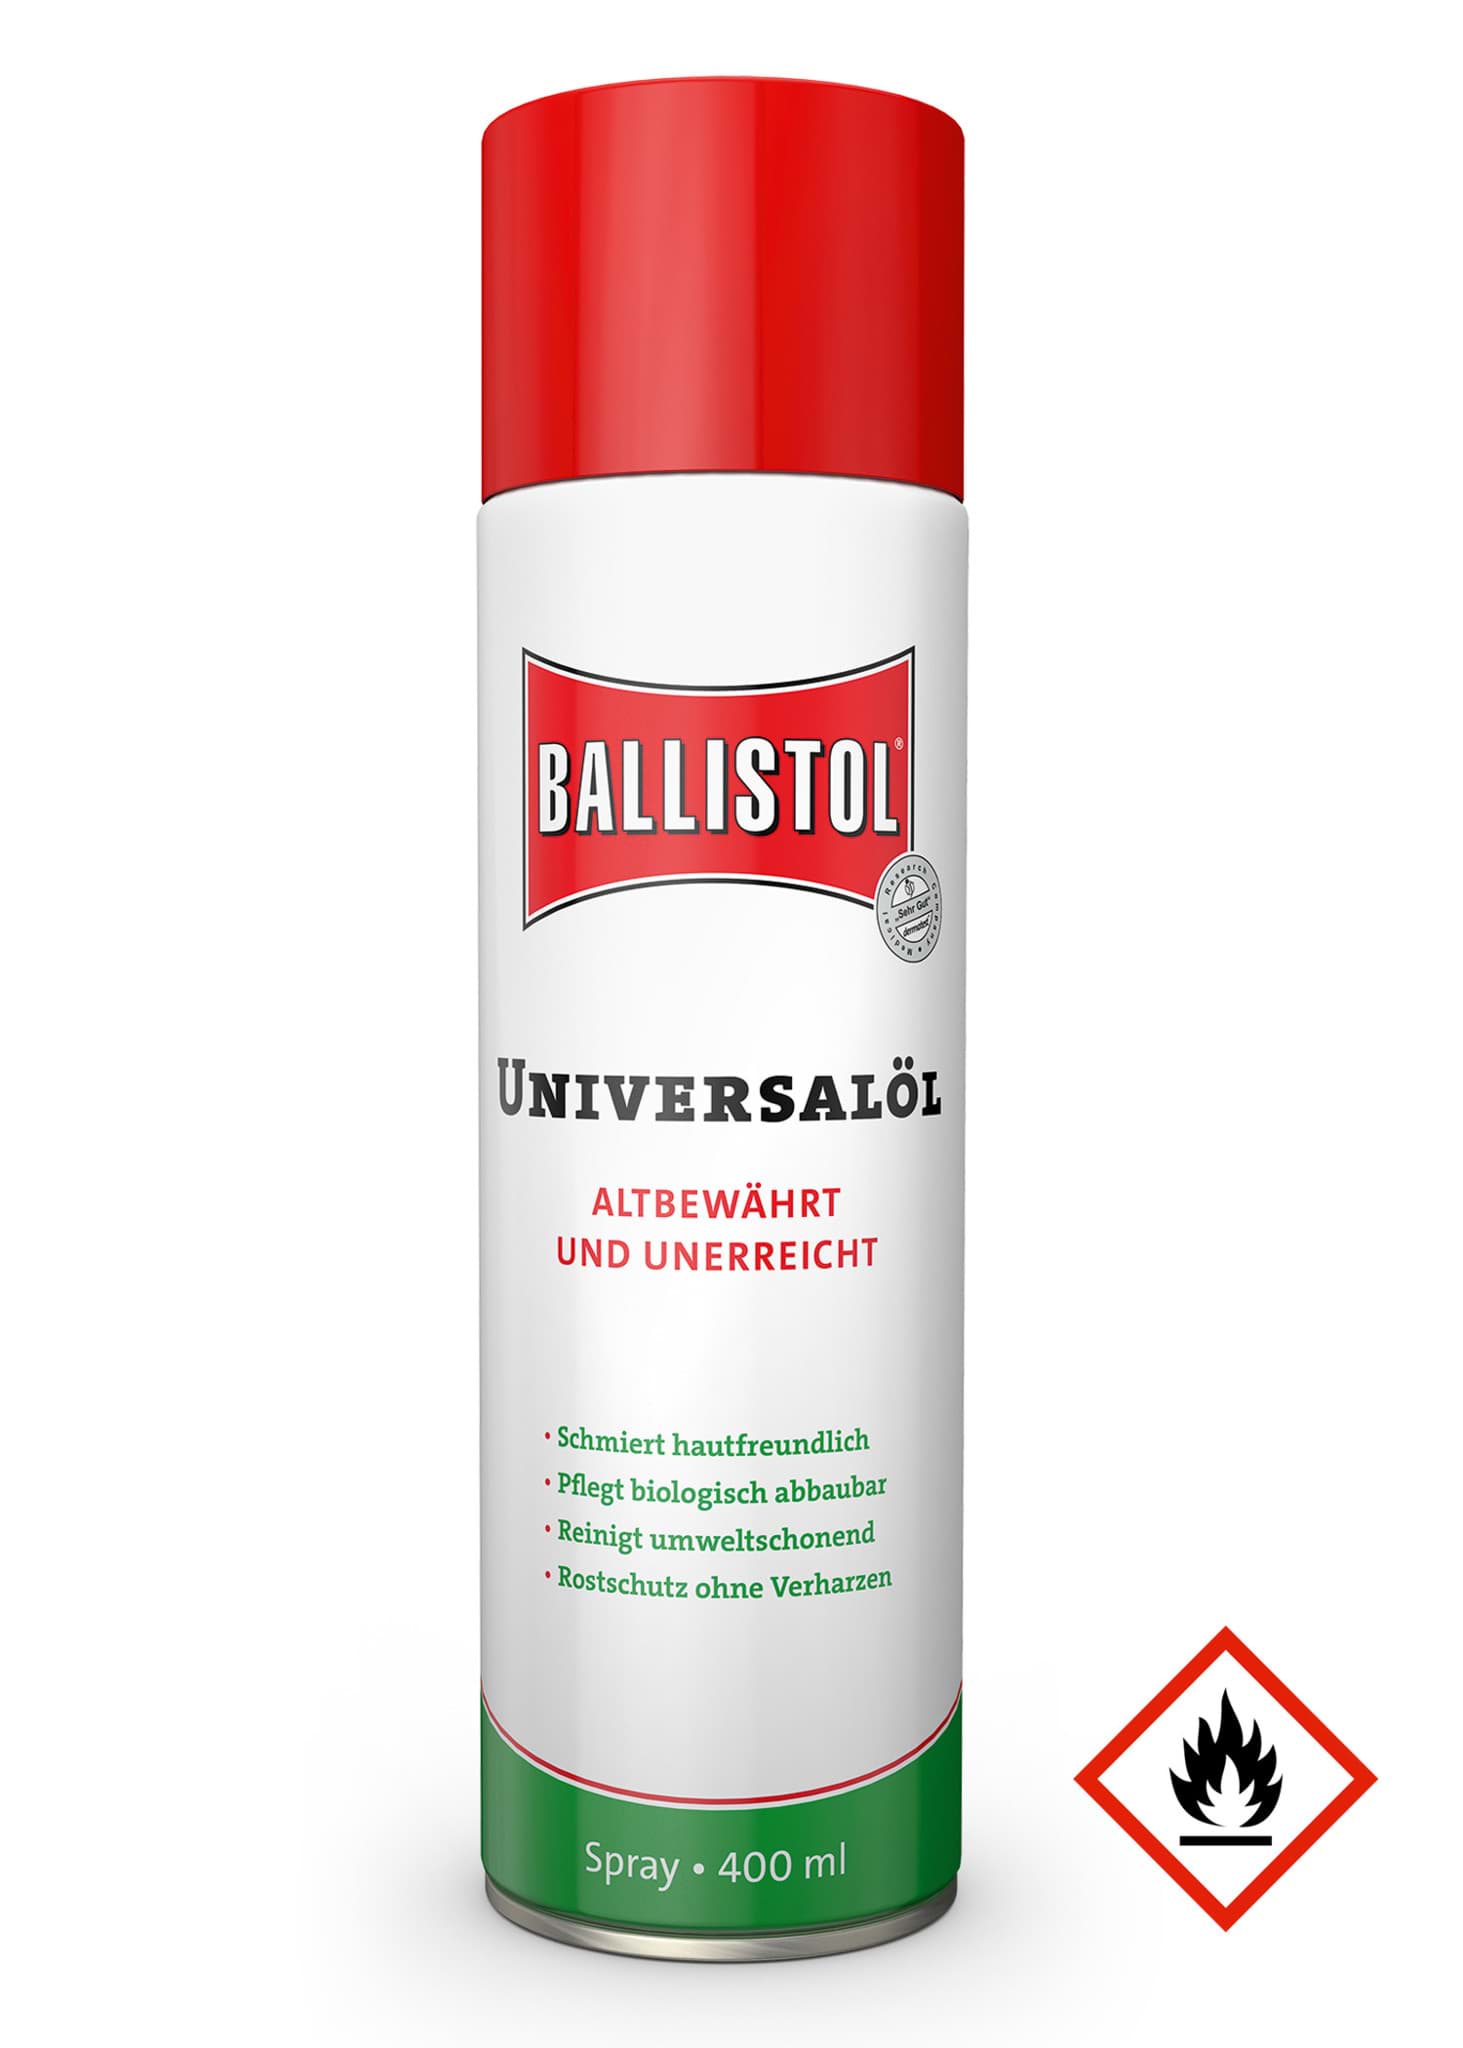 Picture of Ballistol - Universal Oil 400 ml Spray